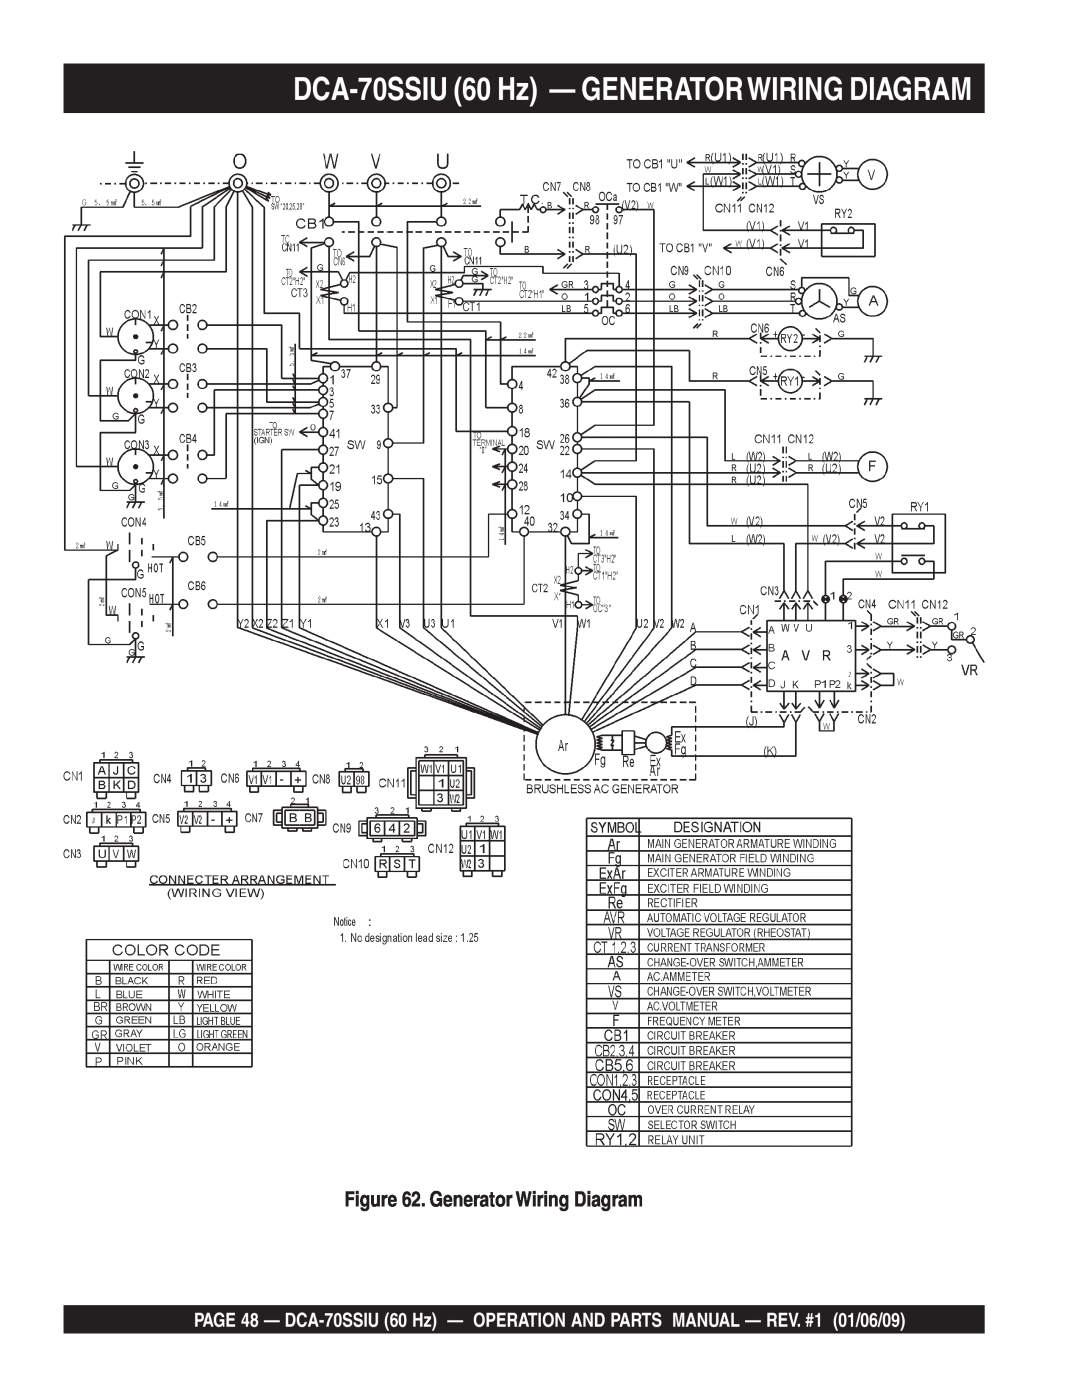 Multiquip M2870300504 operation manual DCA-70SSIU 60 Hz - GENERATORWIRING DIAGRAM, Generator Wiring Diagram 